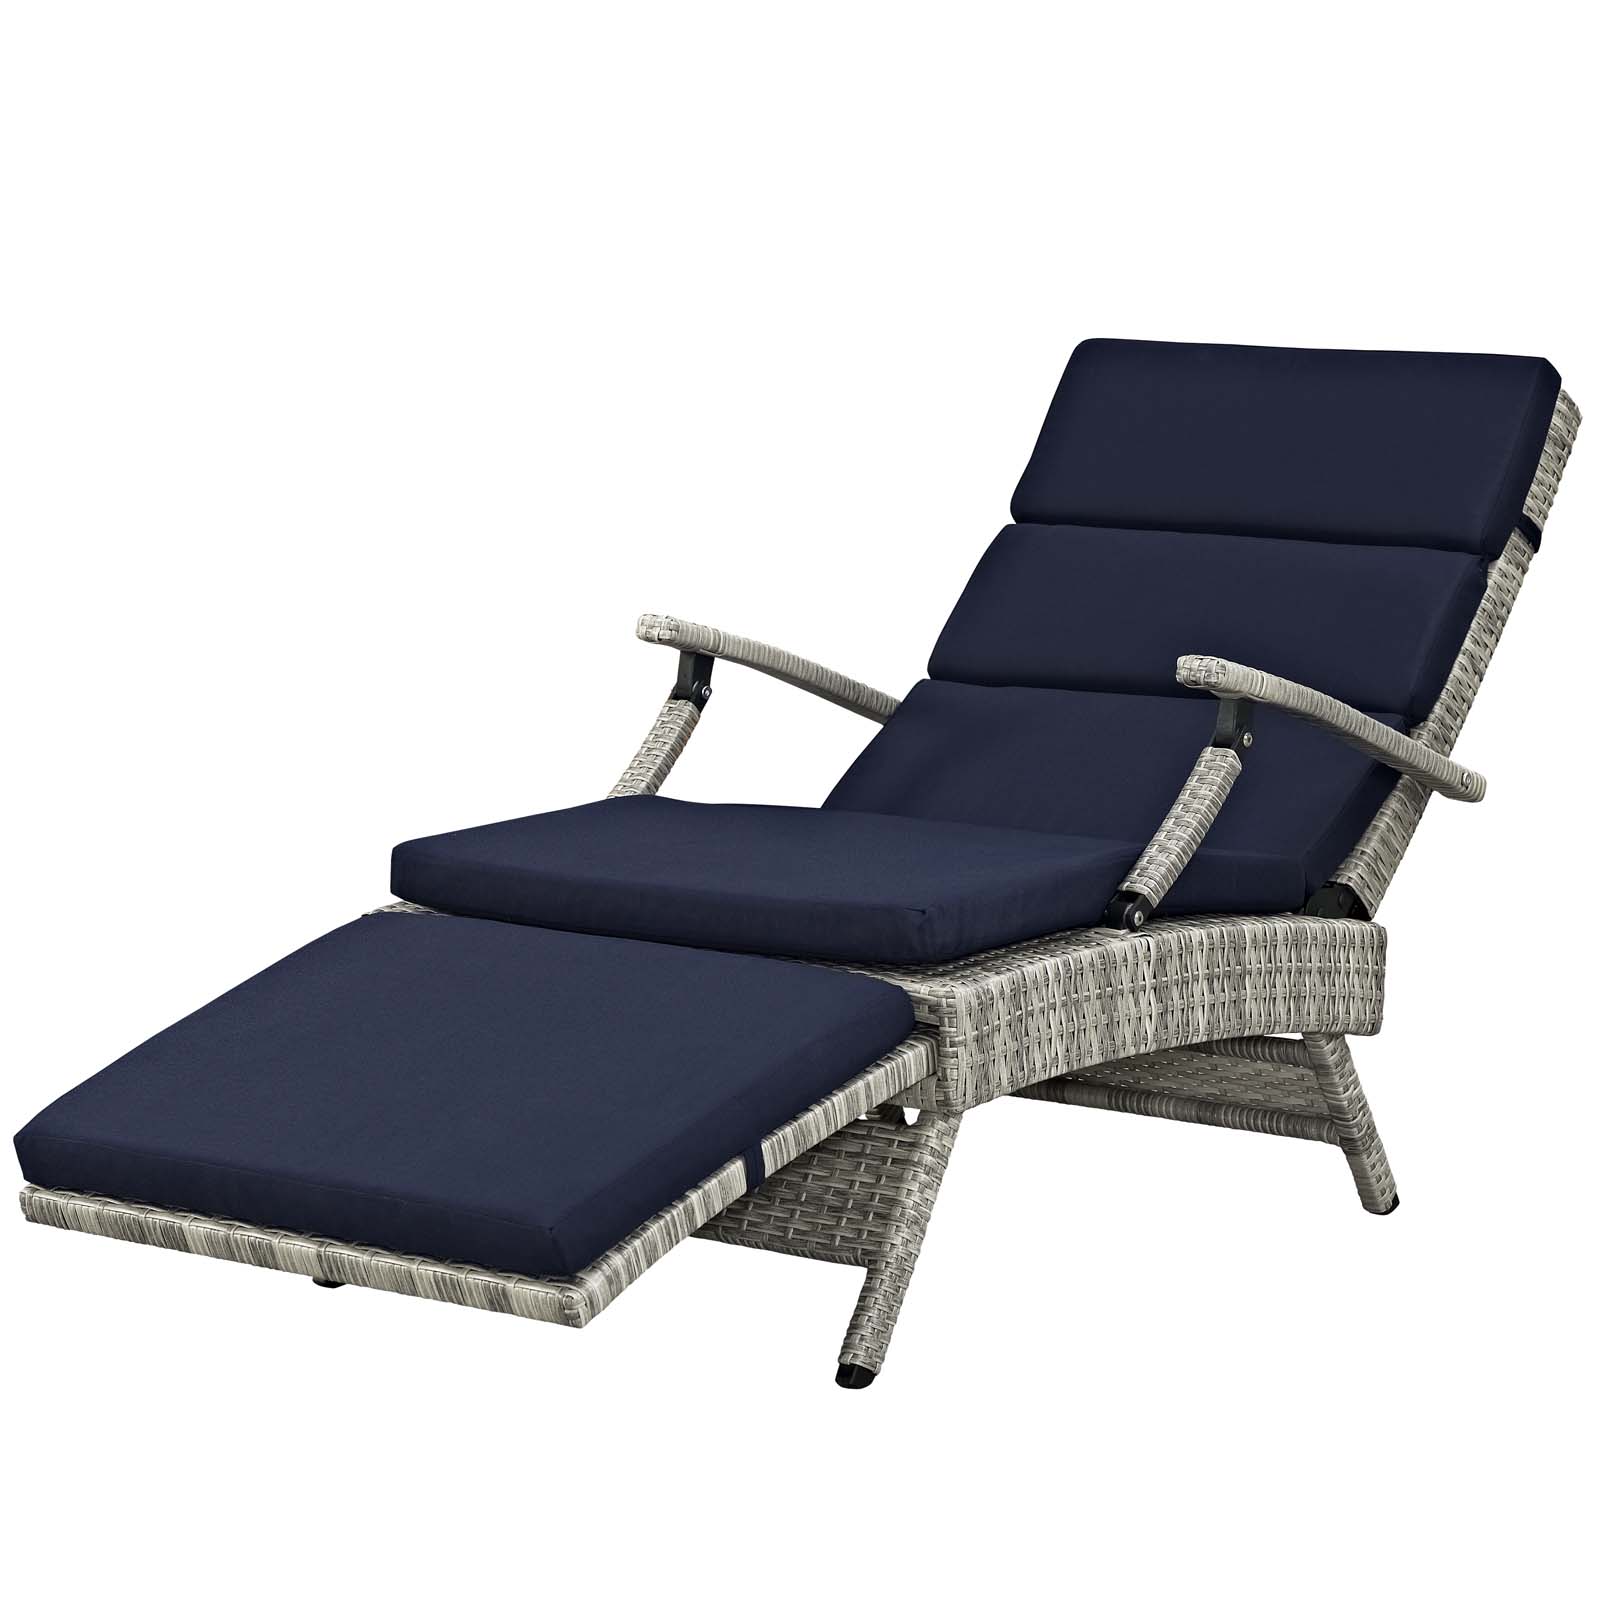 Contemporary Modern Urban Designer Outdoor Patio Balcony Garden Furniture Lounge Chair Chaise, Fabric Rattan Wicker, Navy Blue - image 4 of 9